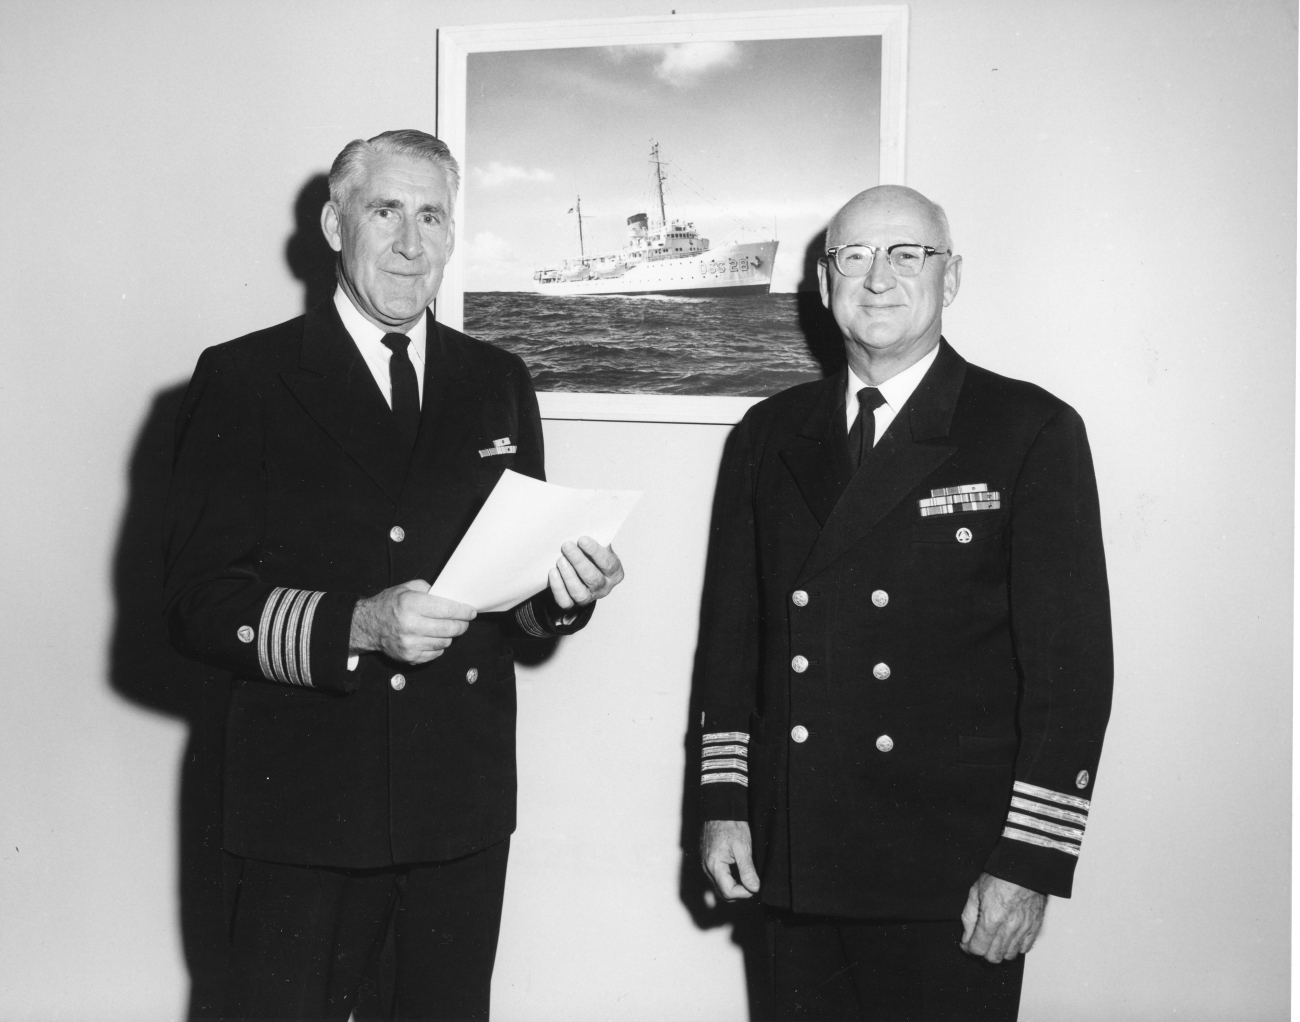 Captain Edmund Jones and Captain John Bull, both former commanding officers ofthe Coast and Geodetic Survey Ship EXPLORER